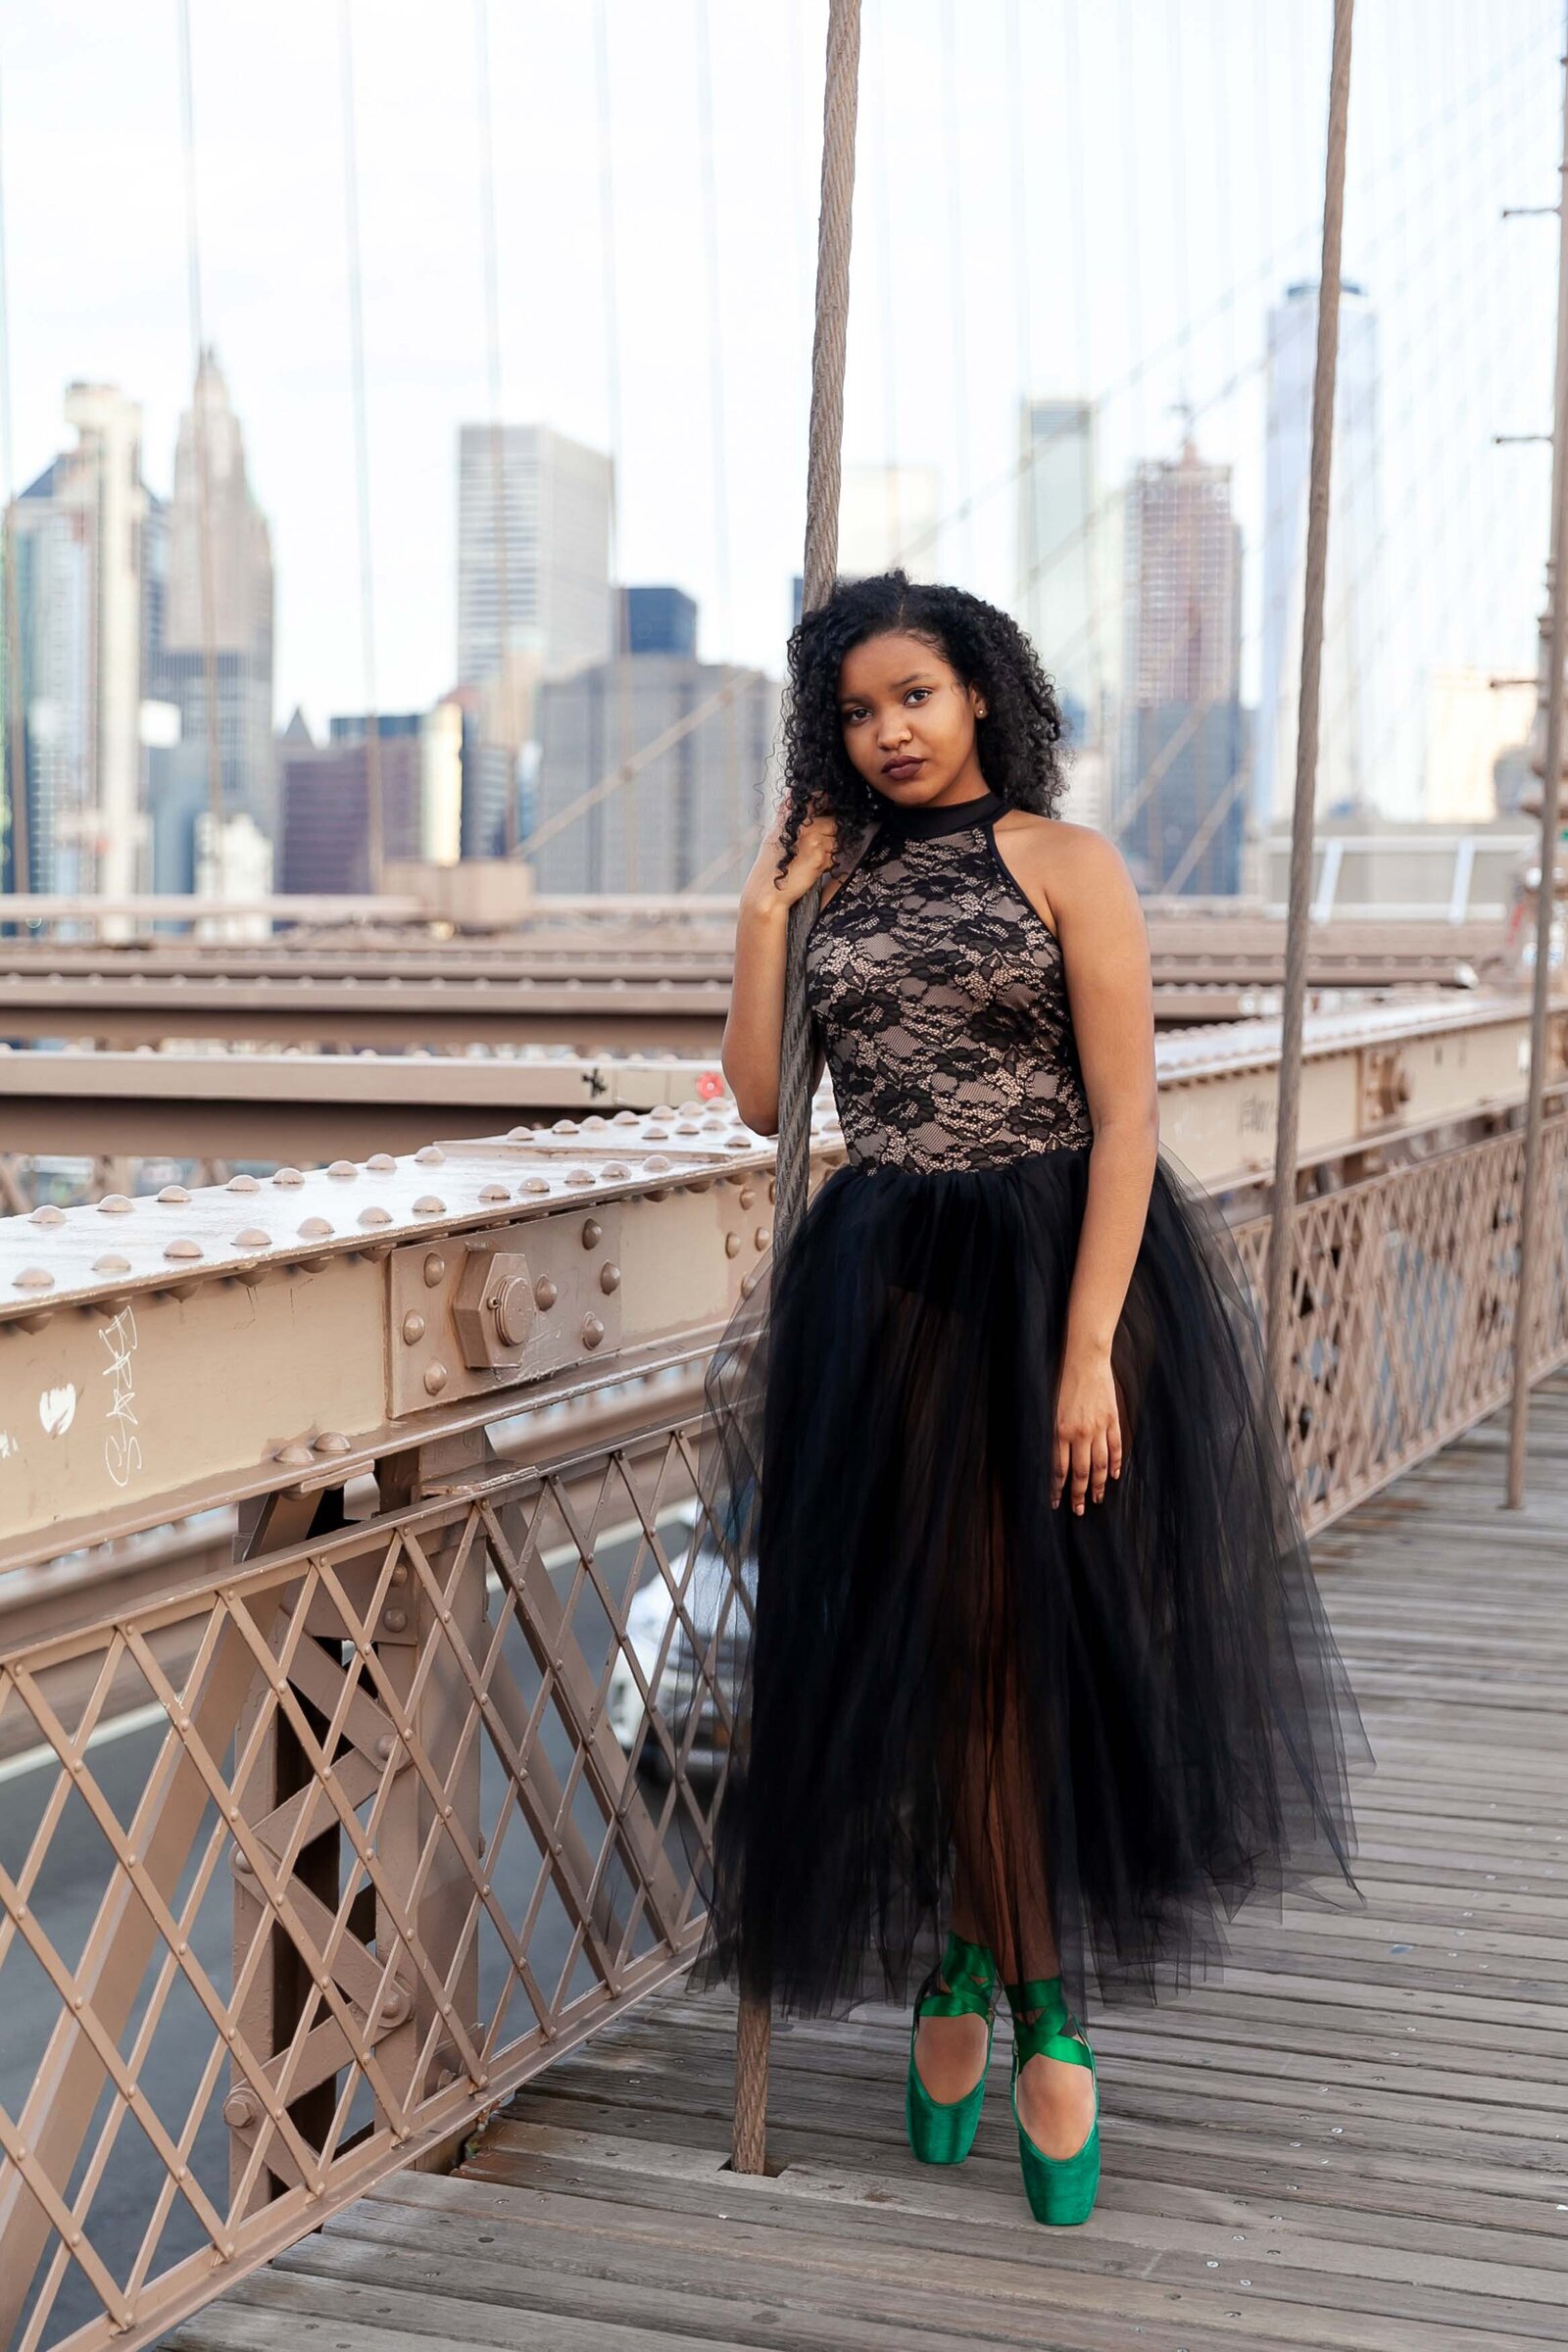 Black ballerina in romantic tutu and green pointe shoes standing on Brooklyn Bridge